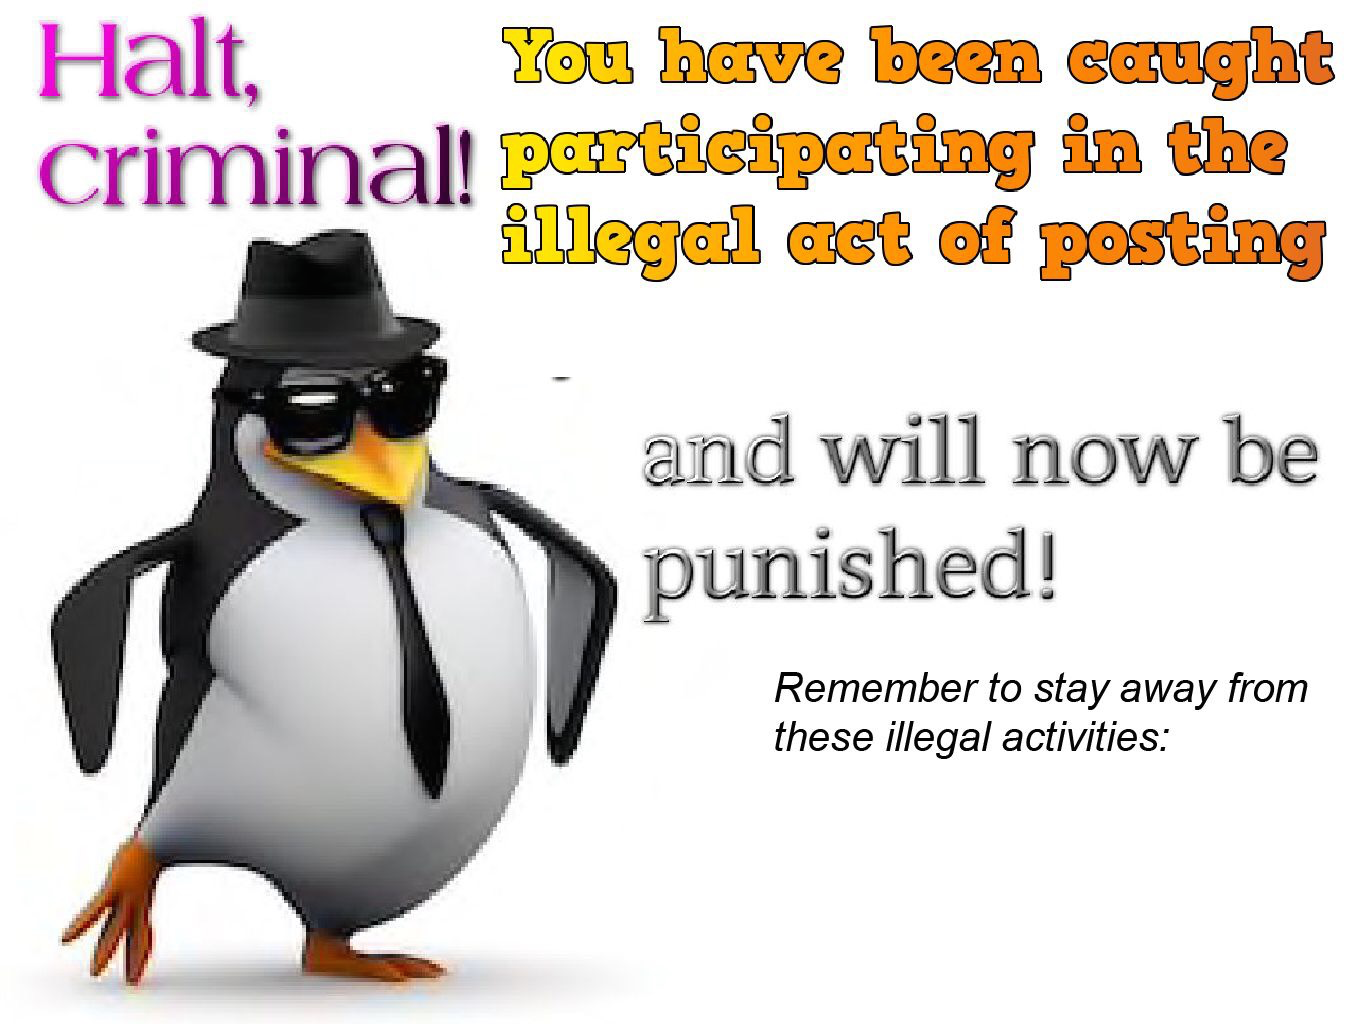 halt criminal! Blank Meme Template